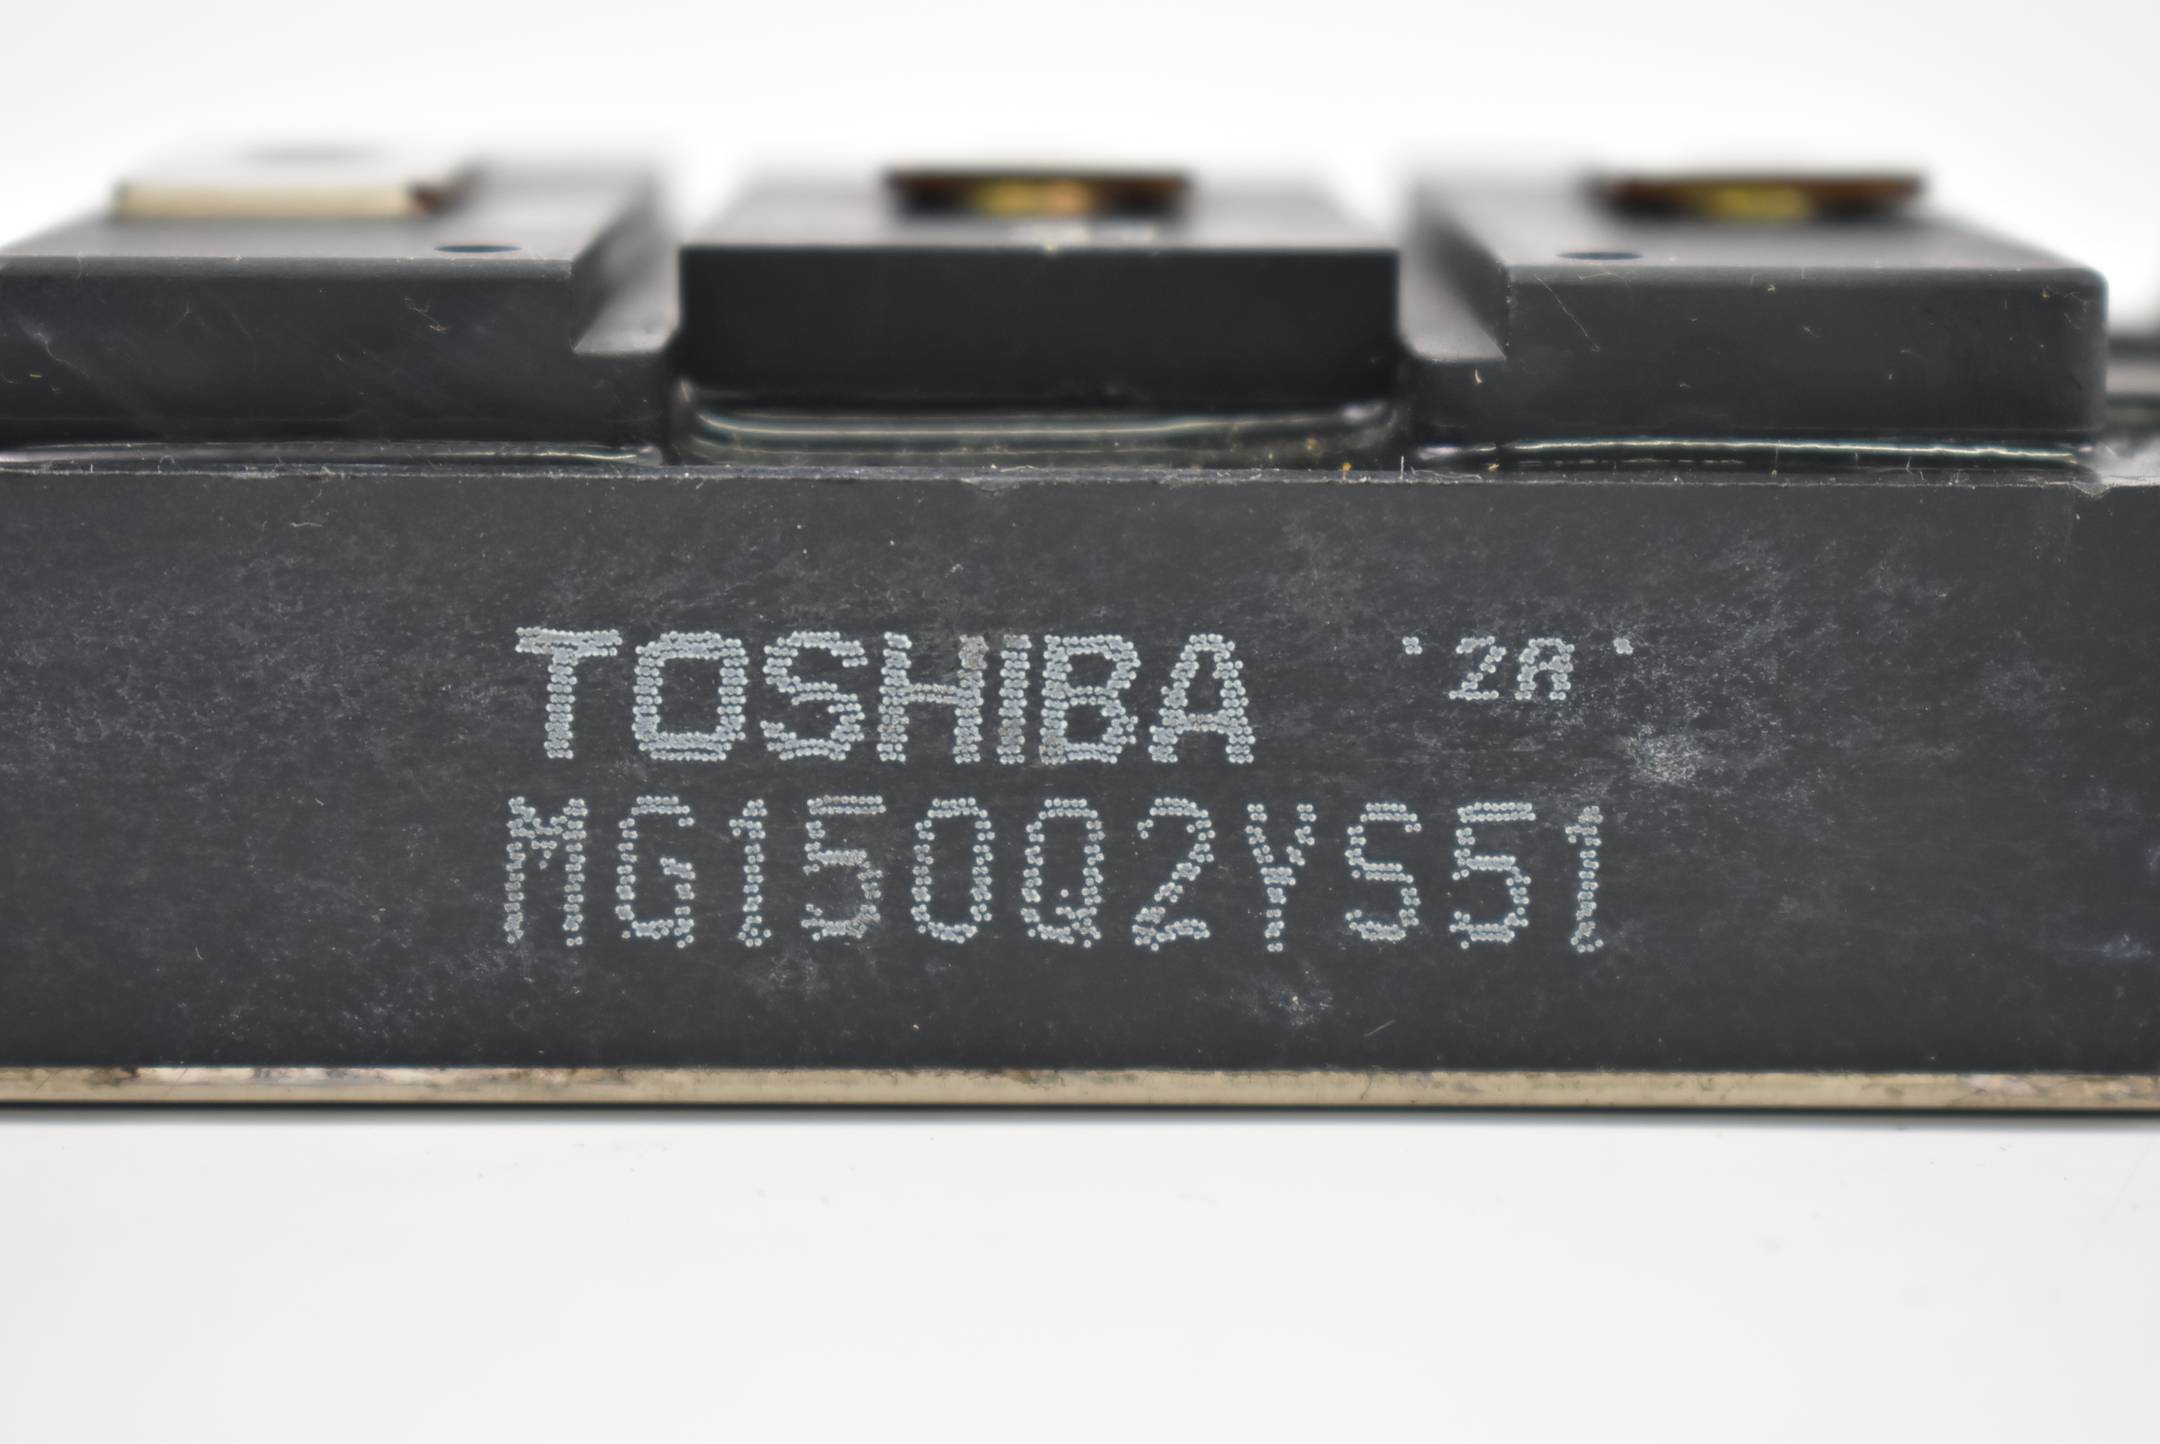 Toshiba Power Module MG150Q2YS51